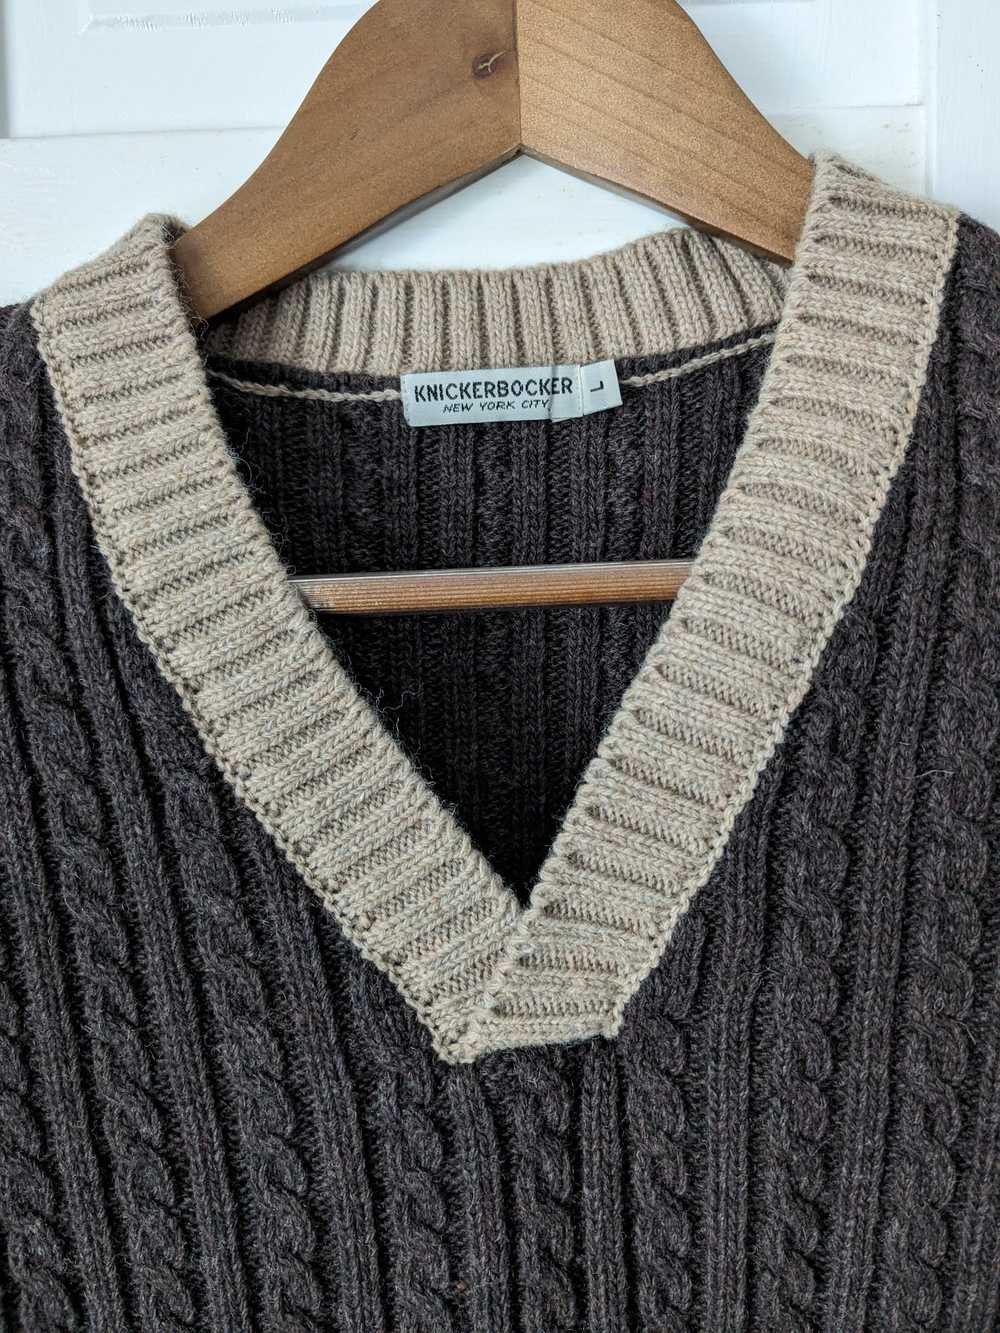 Knickerbocker Mfg Co Wool blend cable knit sweate… - image 3